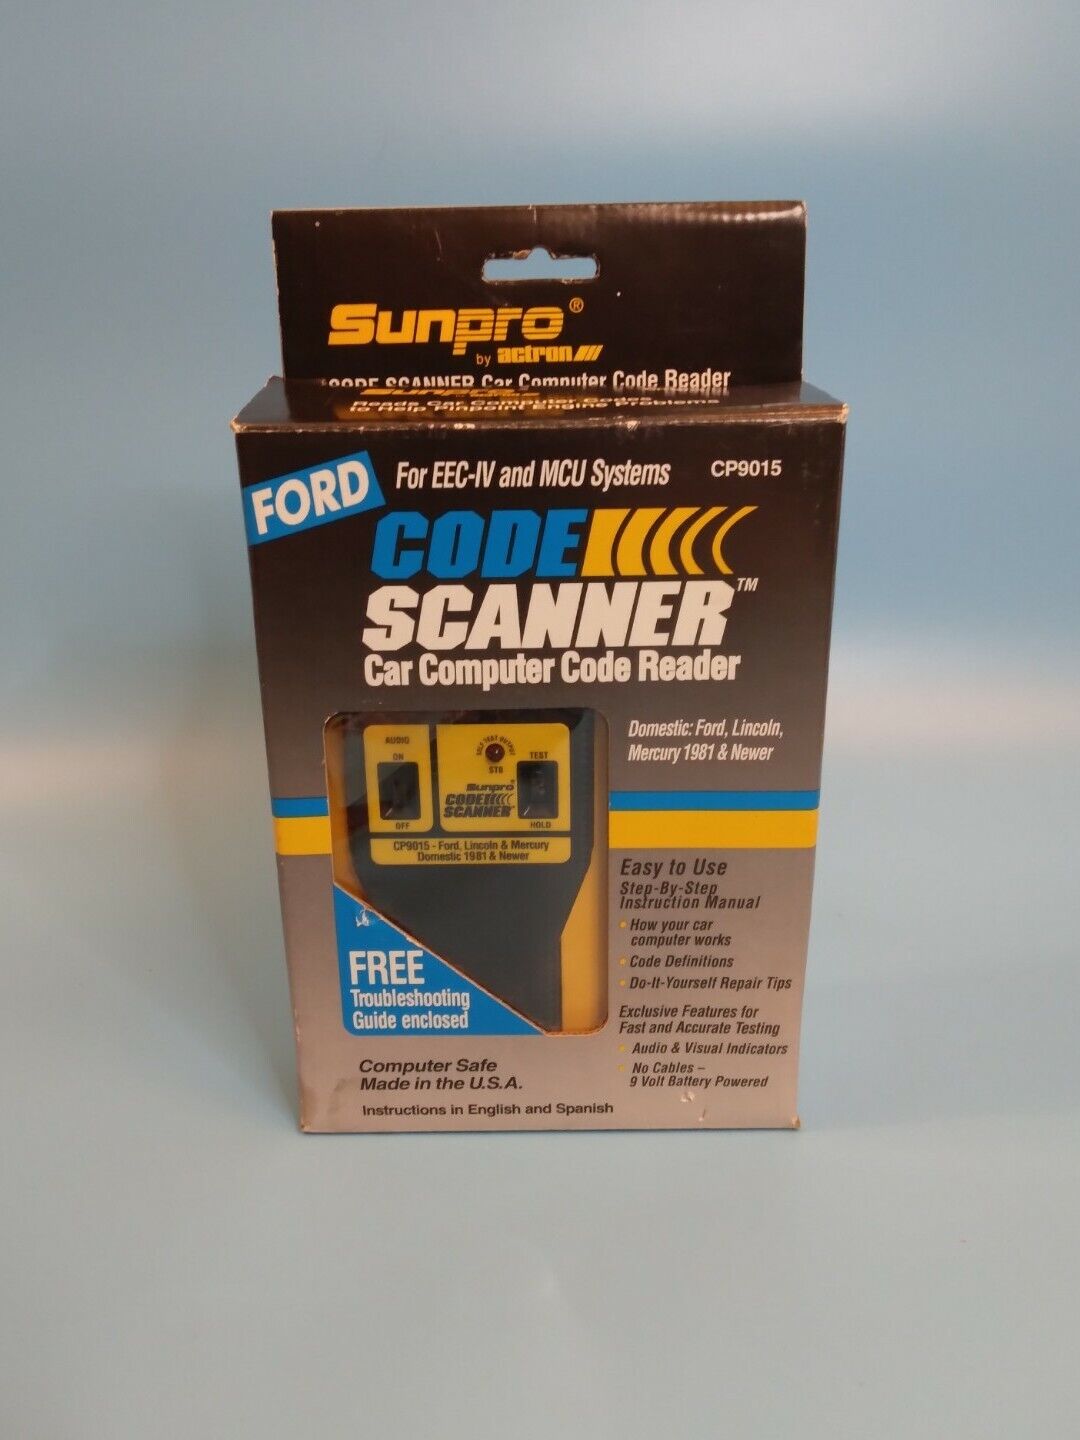 Sunpro Codes Scanner CP9015 FORD,LICOLN,MERCURY Domestic 1981 & Newer